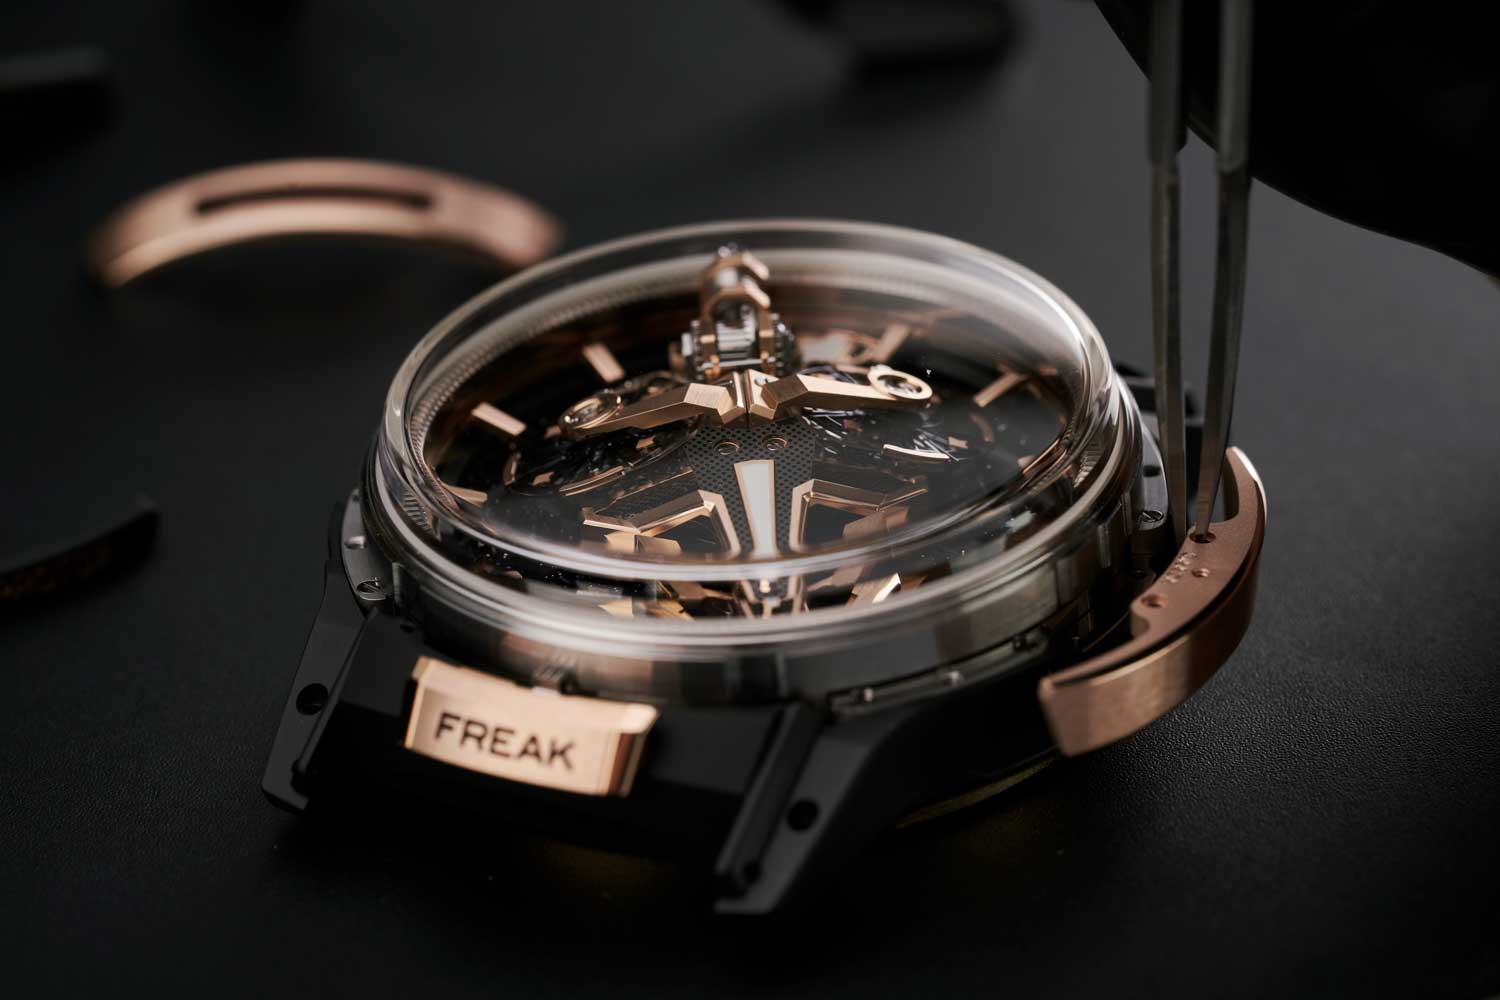 The Freak S complex case is a modular design featuring 5N rose gold, black DLC titanium and ceramic